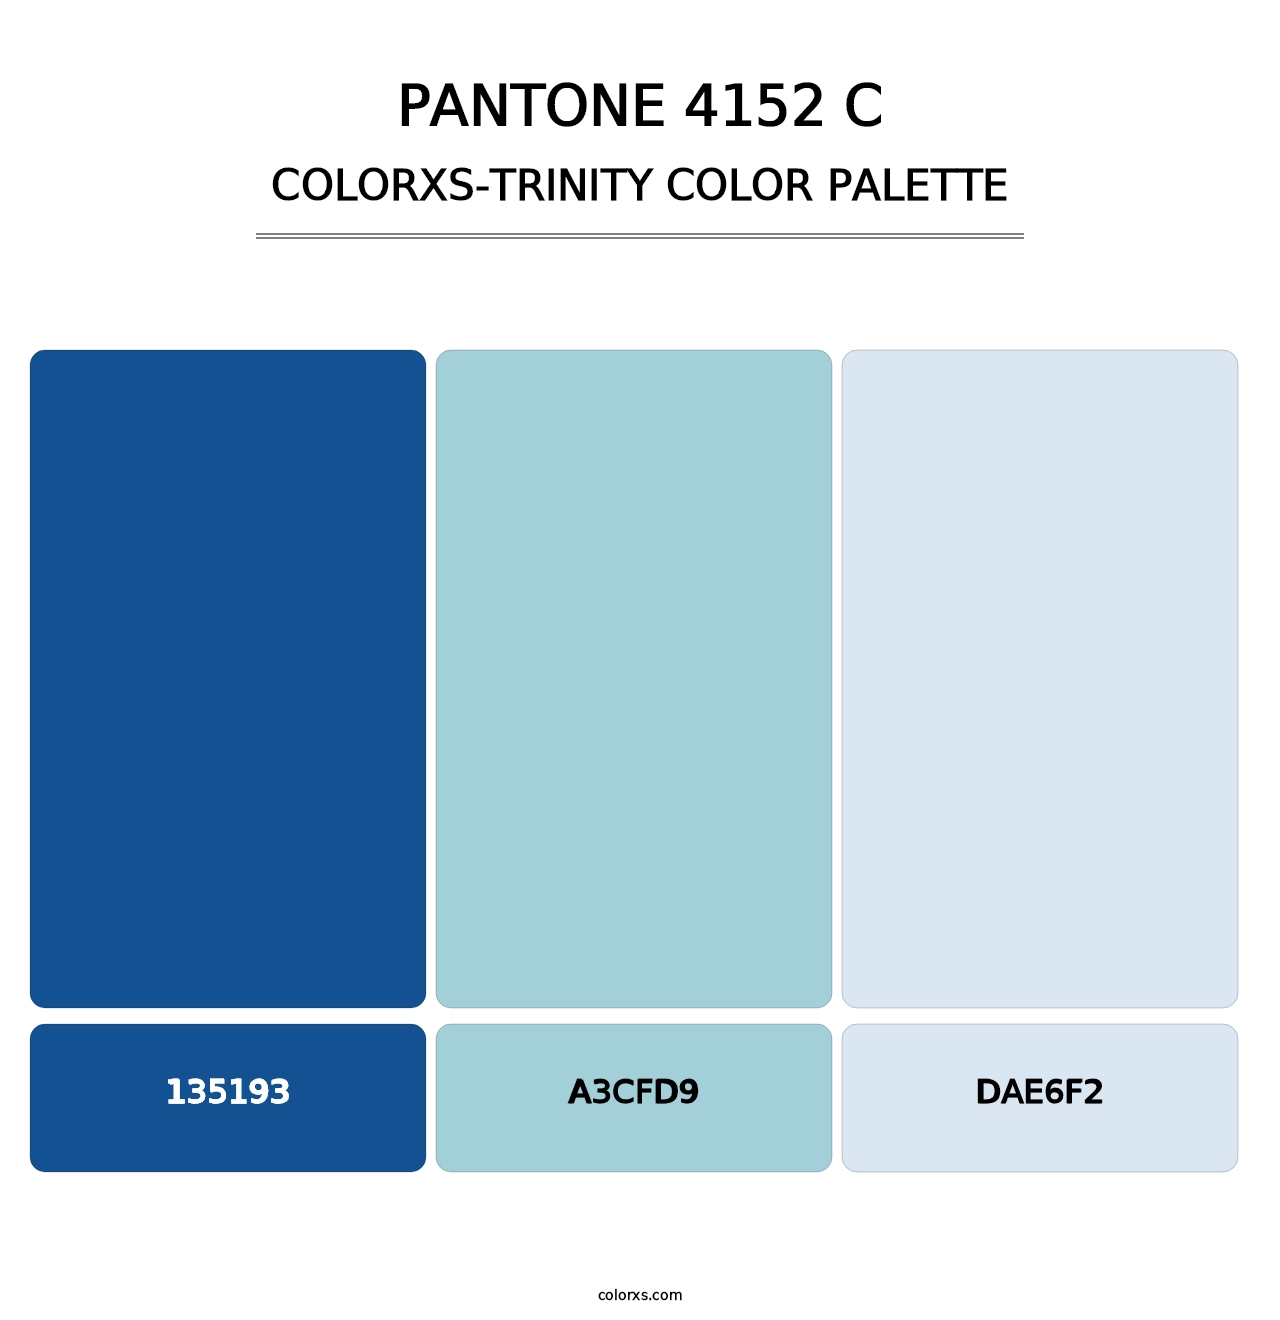 PANTONE 4152 C - Colorxs Trinity Palette